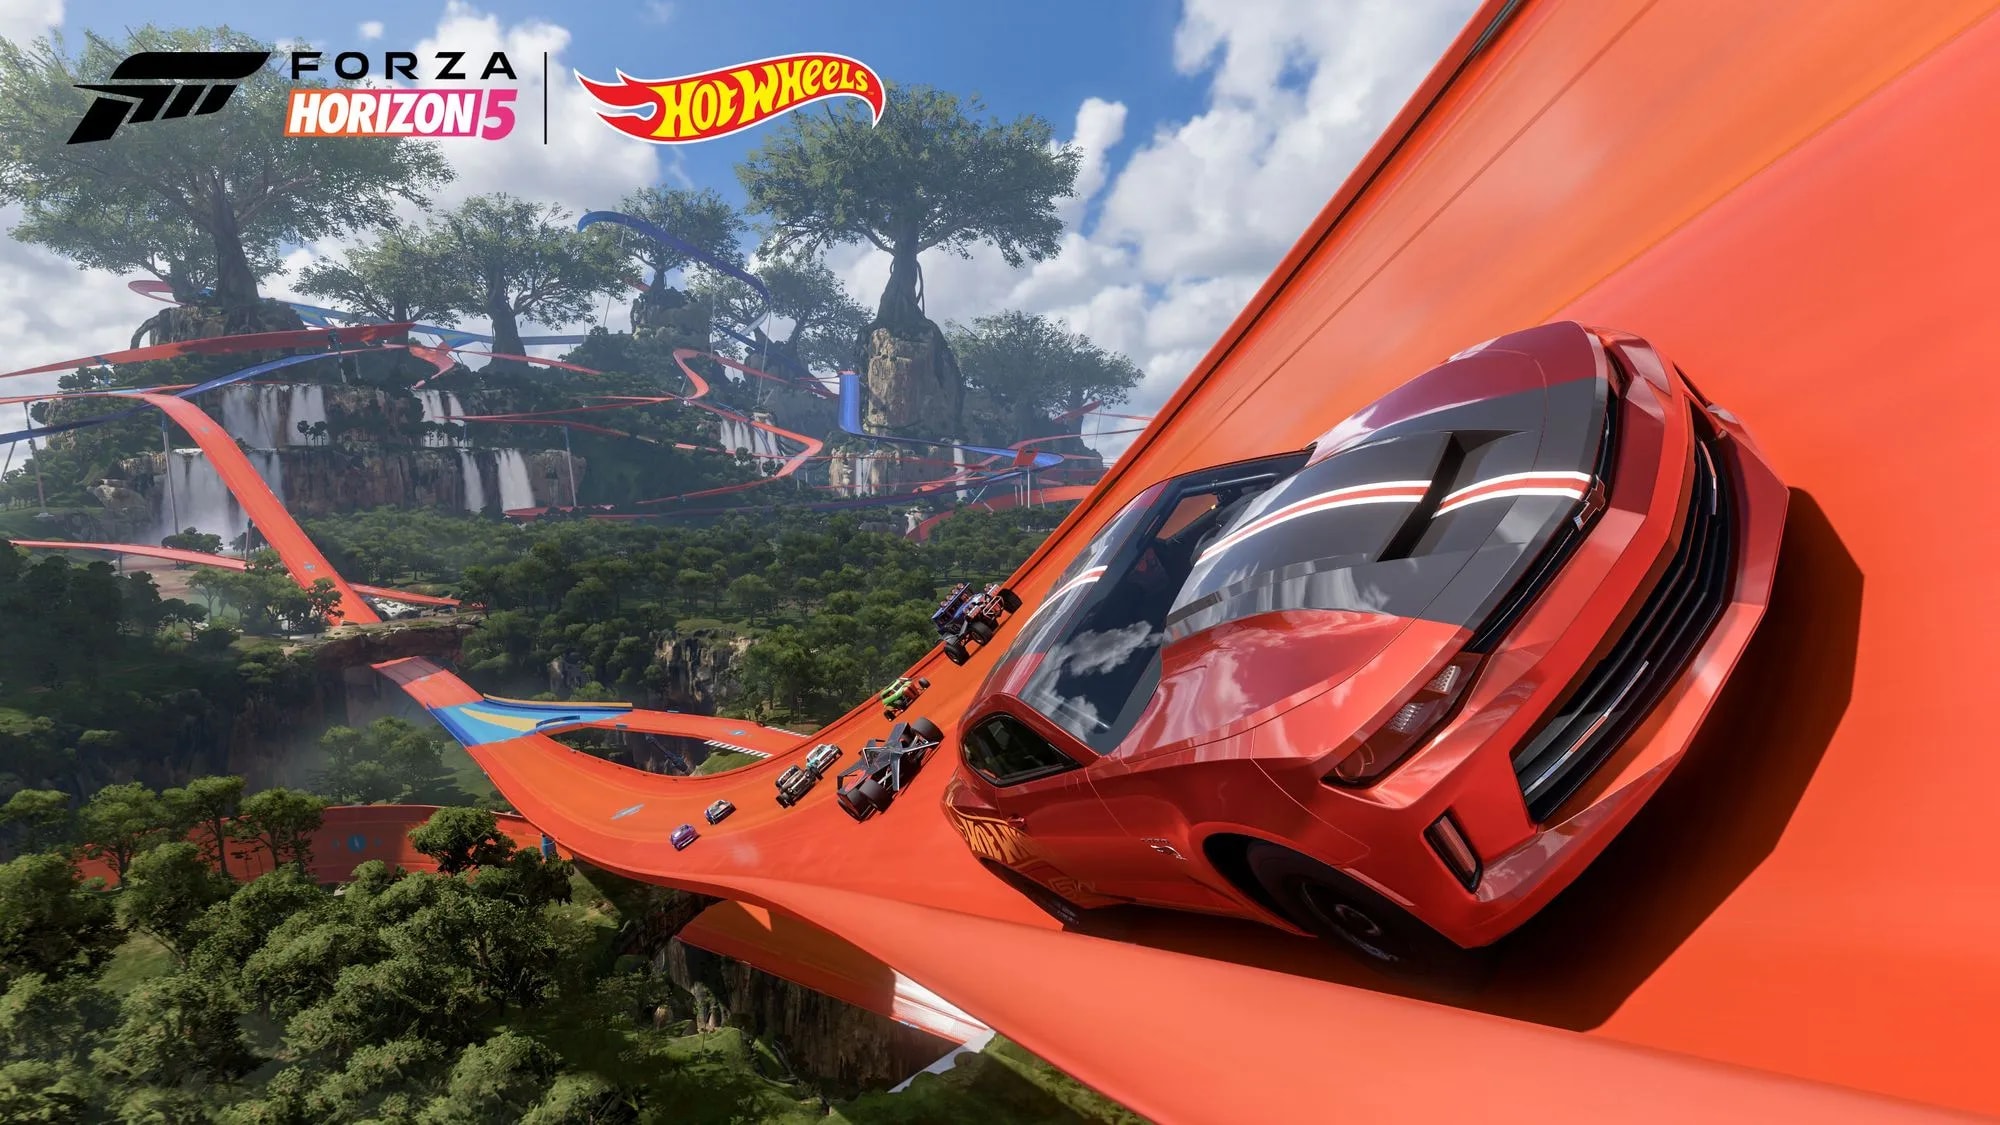 Forza Horizon 4 and Forza Horizon 3 Bundle Releasing 5th February